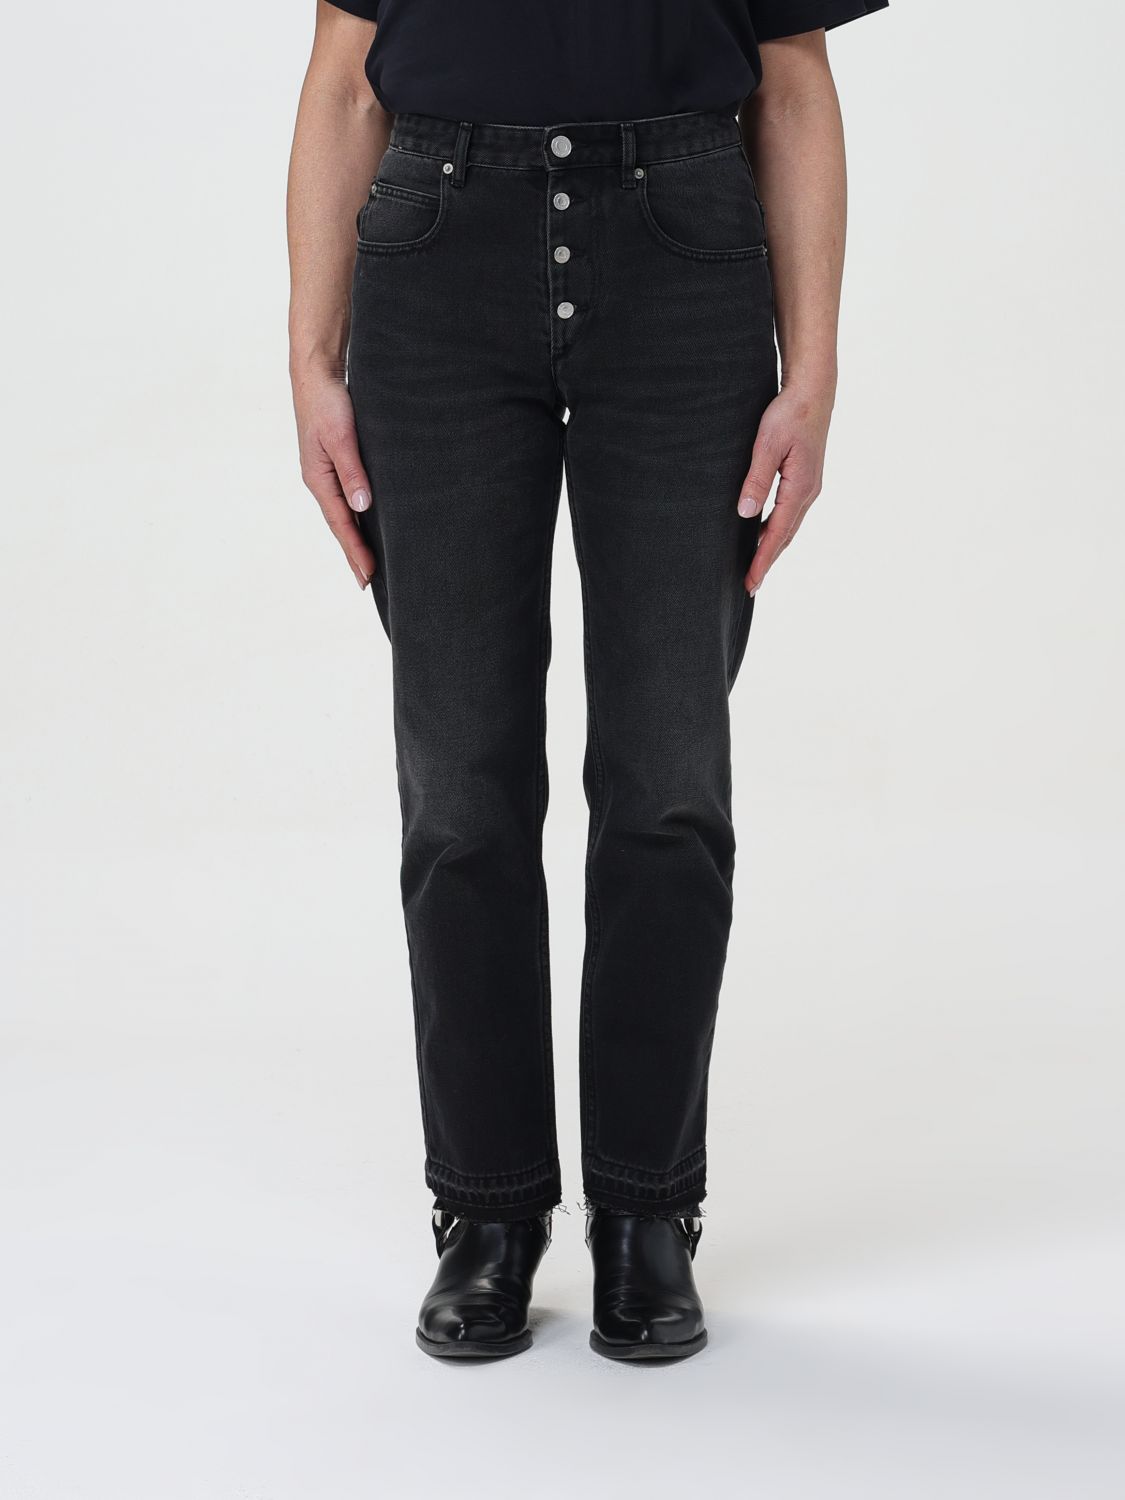 Isabel Marant Jeans  Woman Color Black